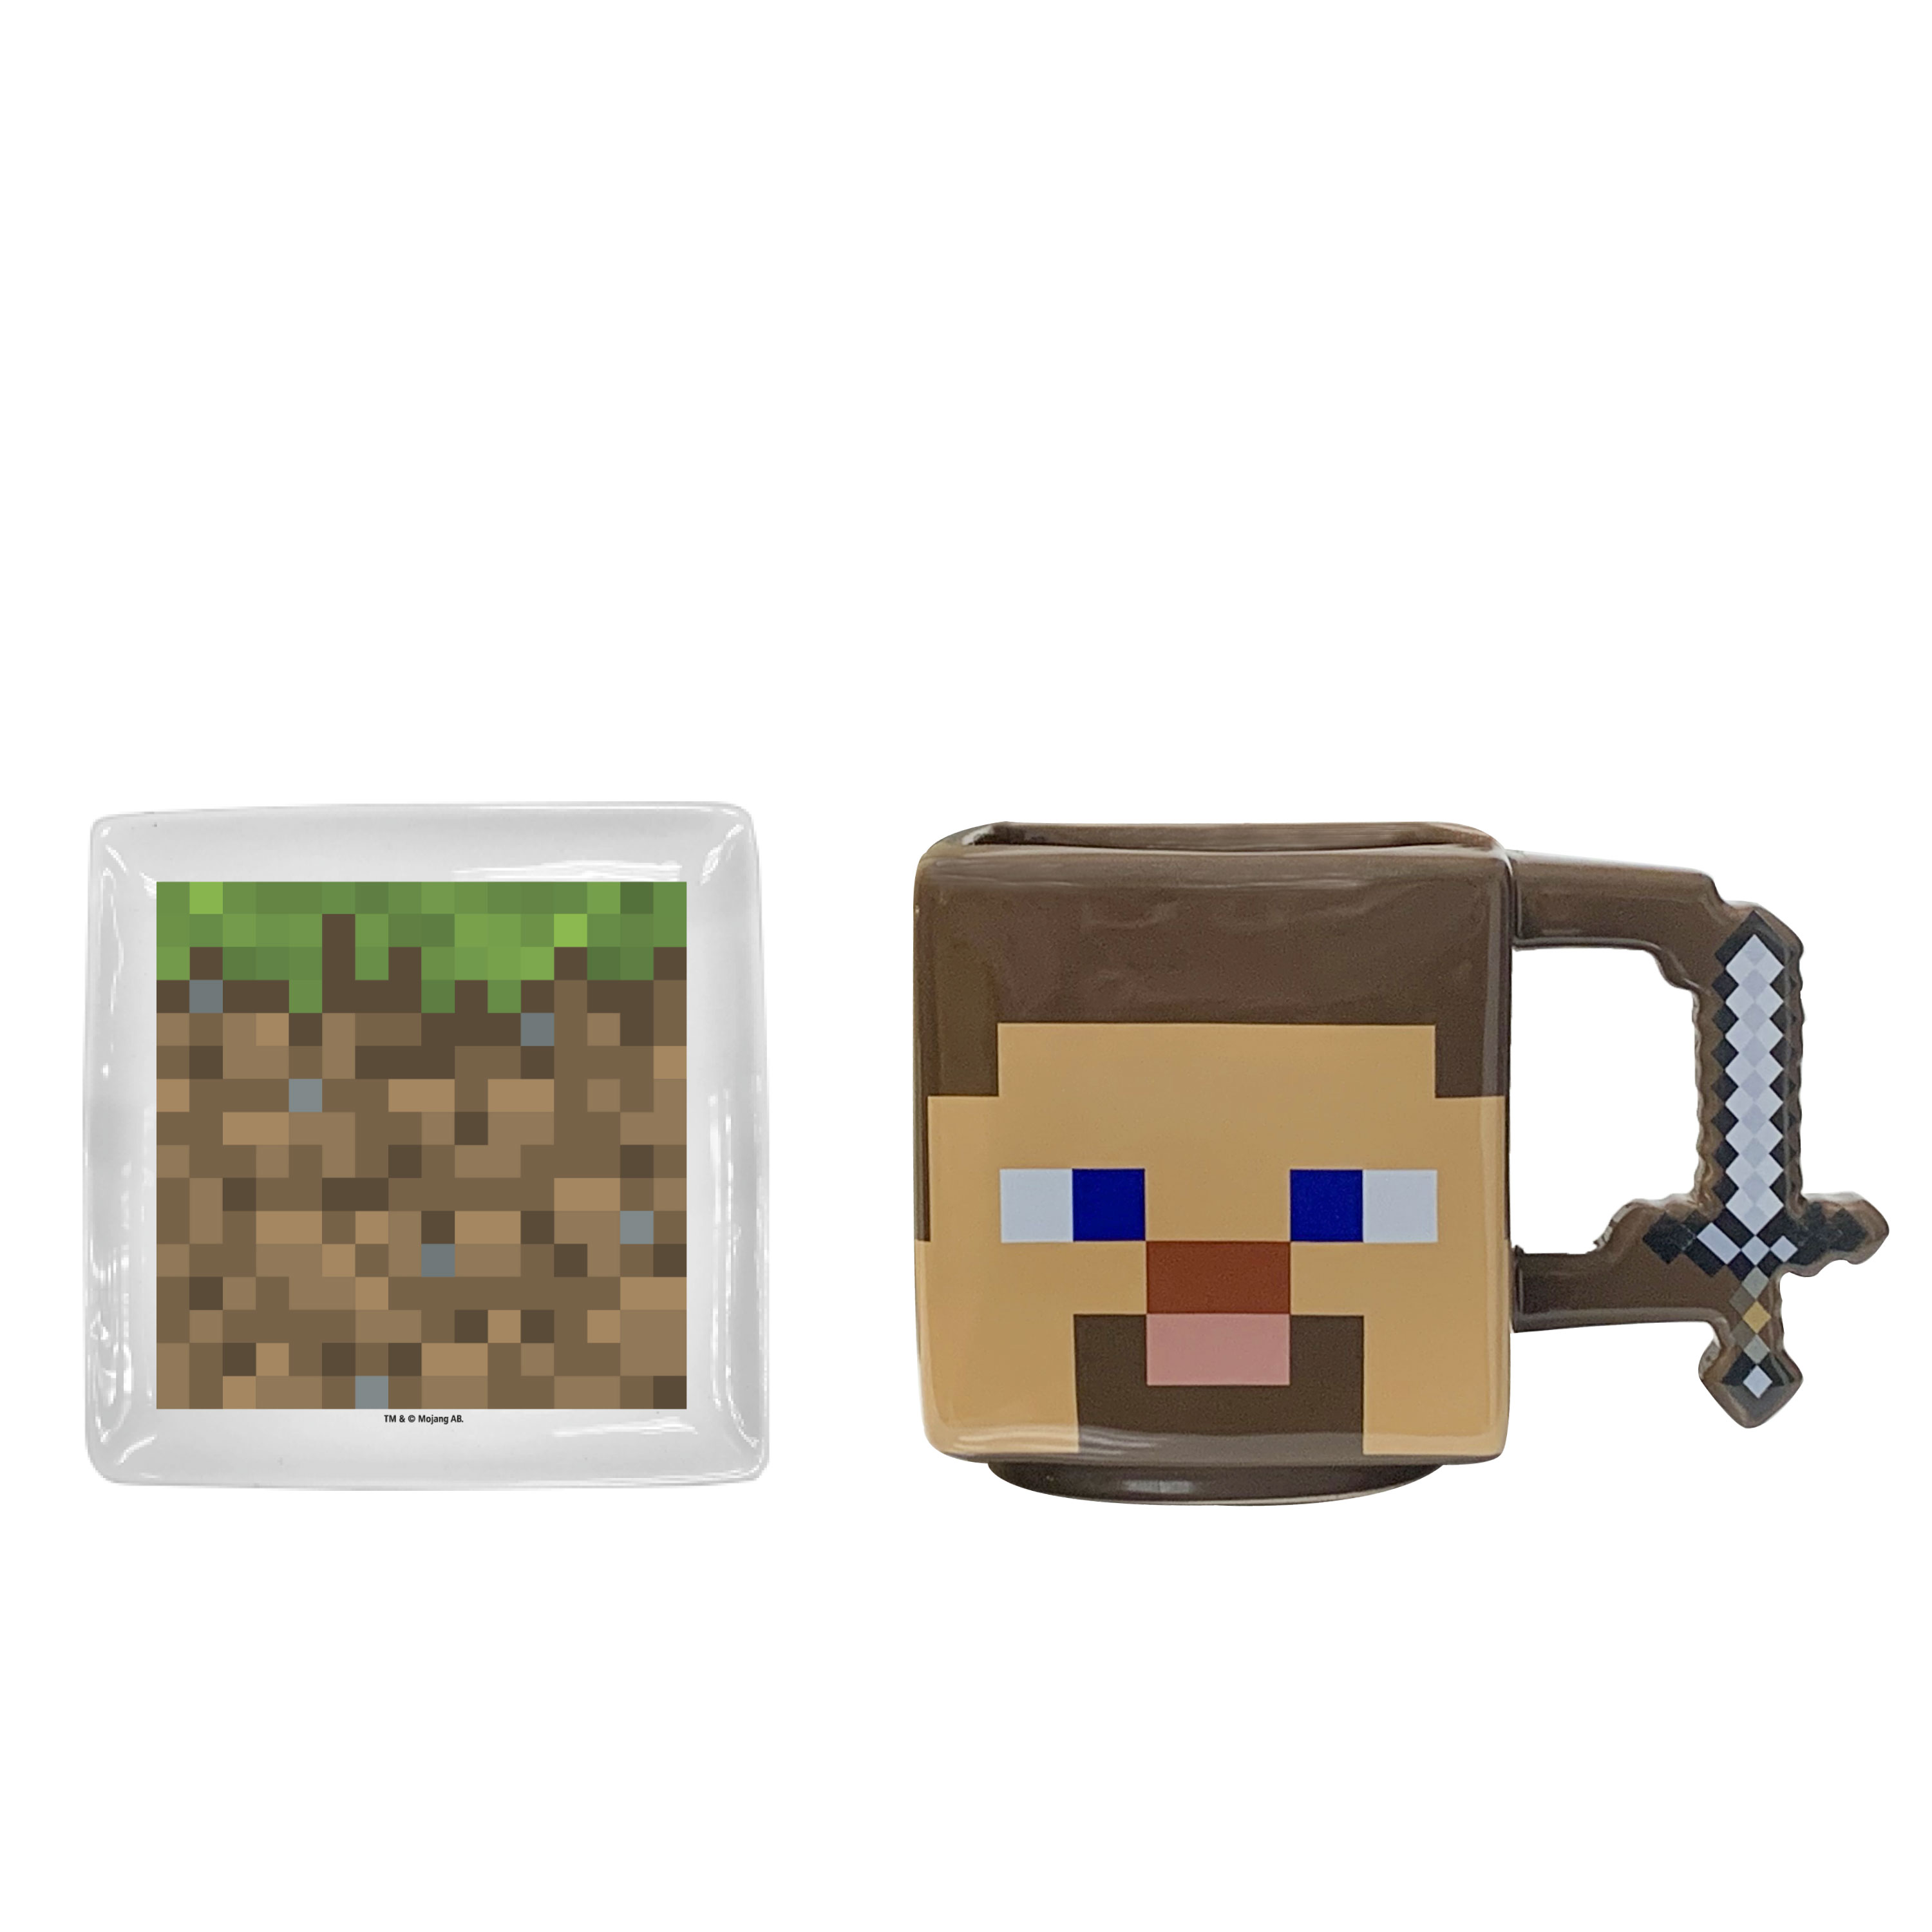 Minecraft Ceramic Plate and Mug Set, Creeper, 2-piece set slideshow image 1